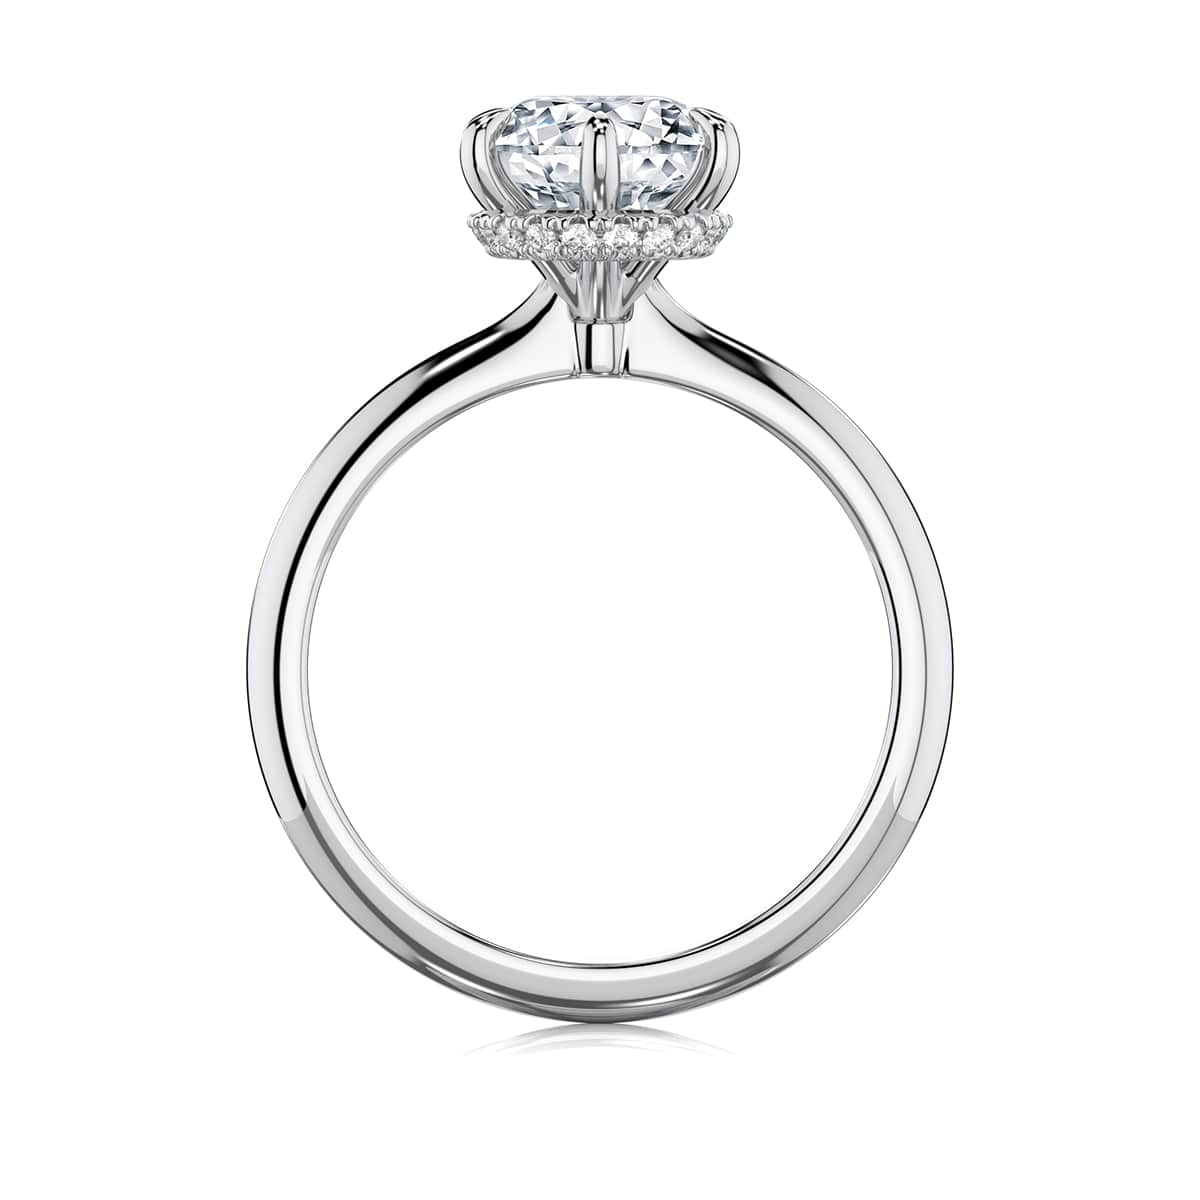 Rebarto White Gold Round Diamond Engagement Ring with Hidden Halo